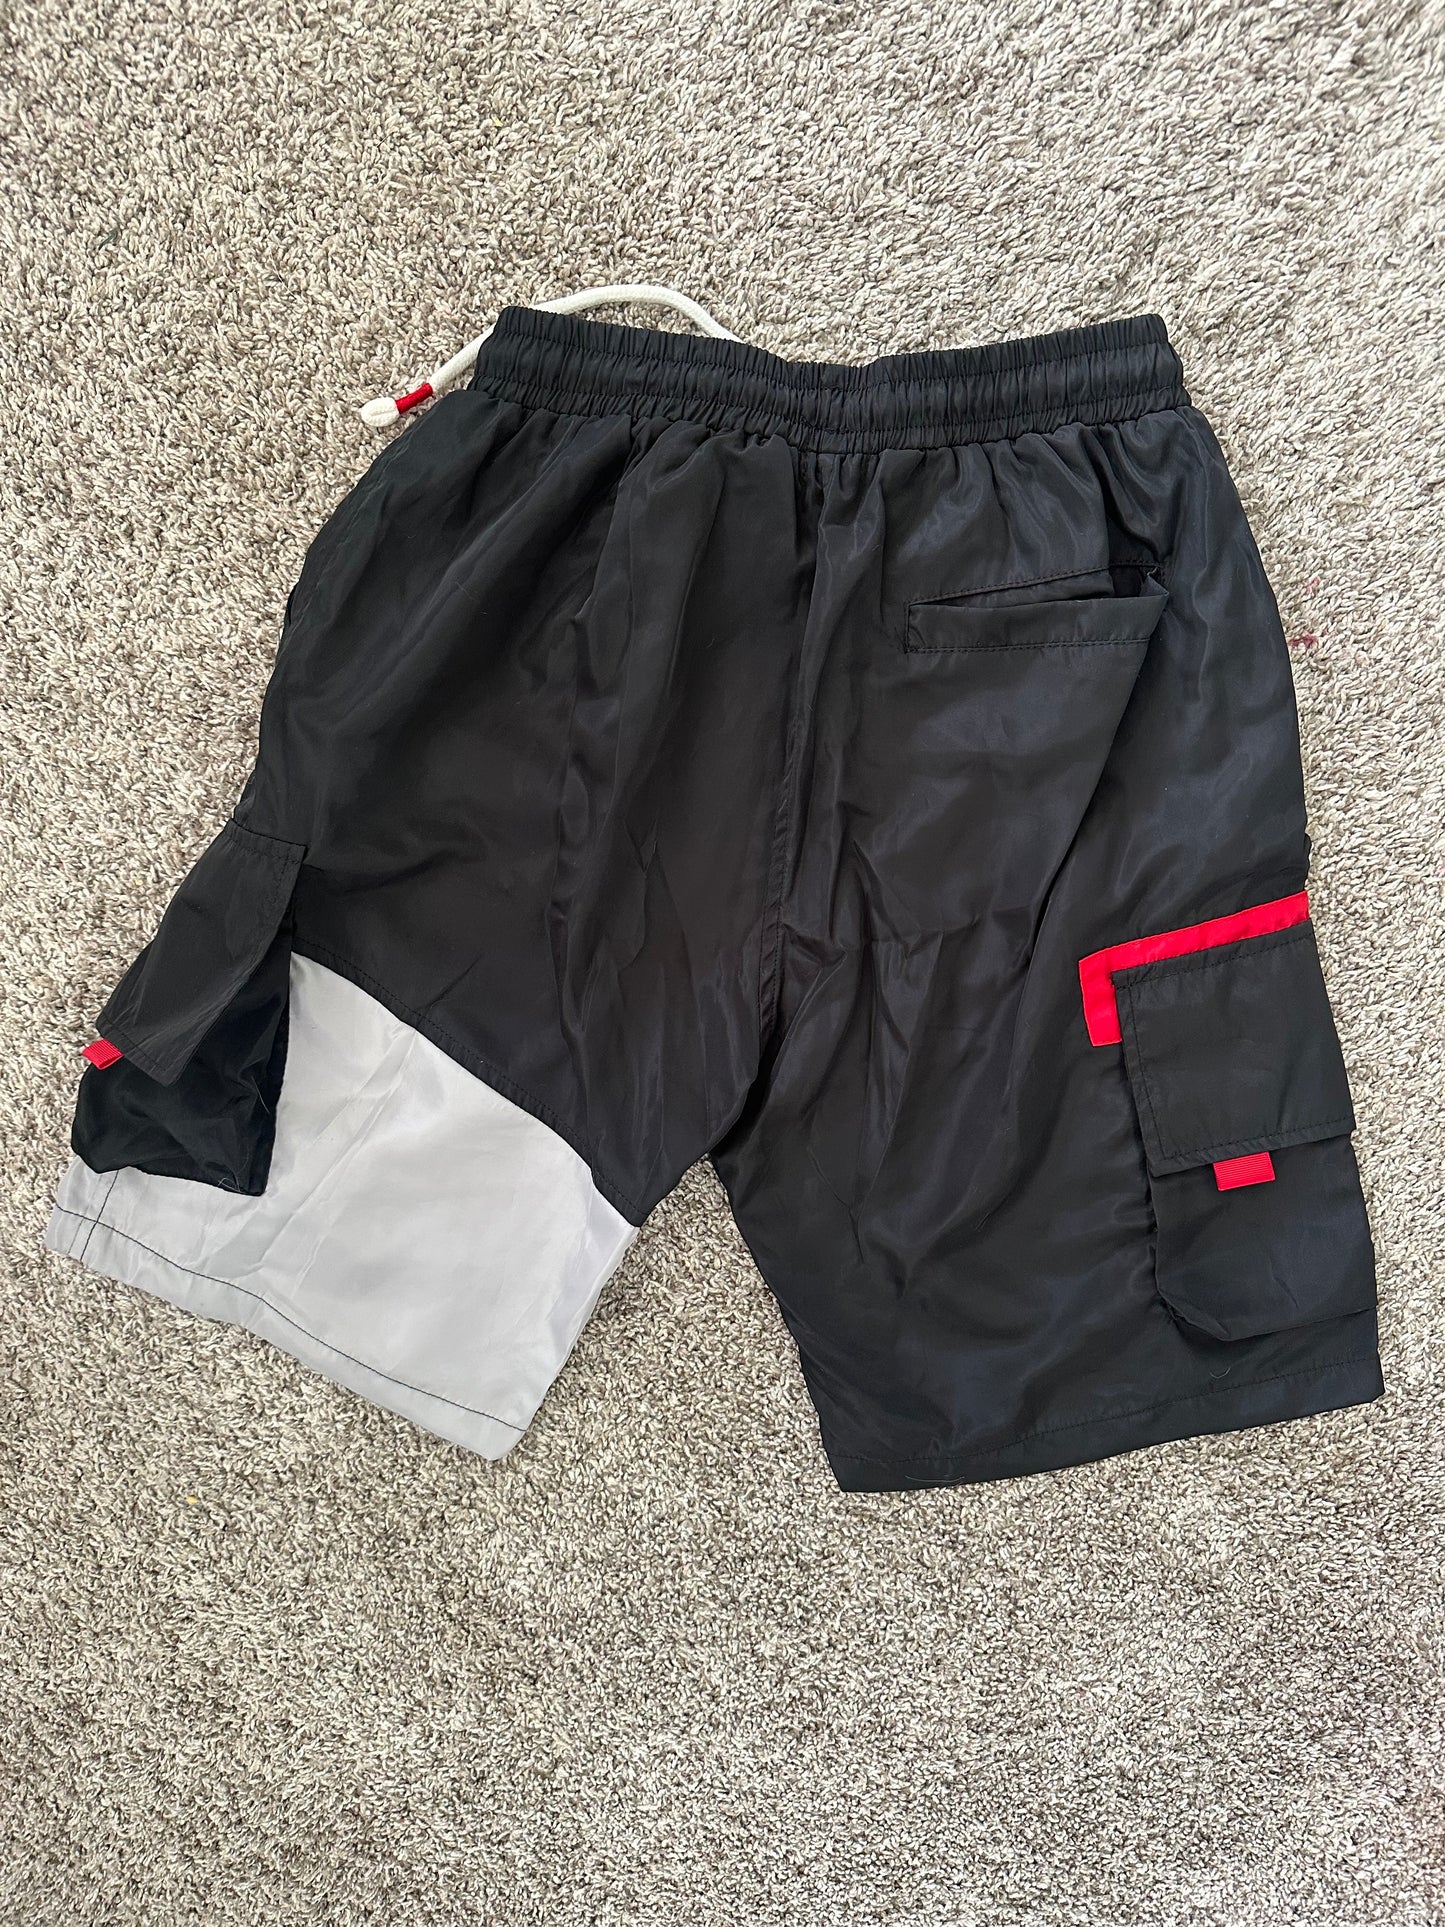 NWT Men’s Black Cargo Shorts, Size M